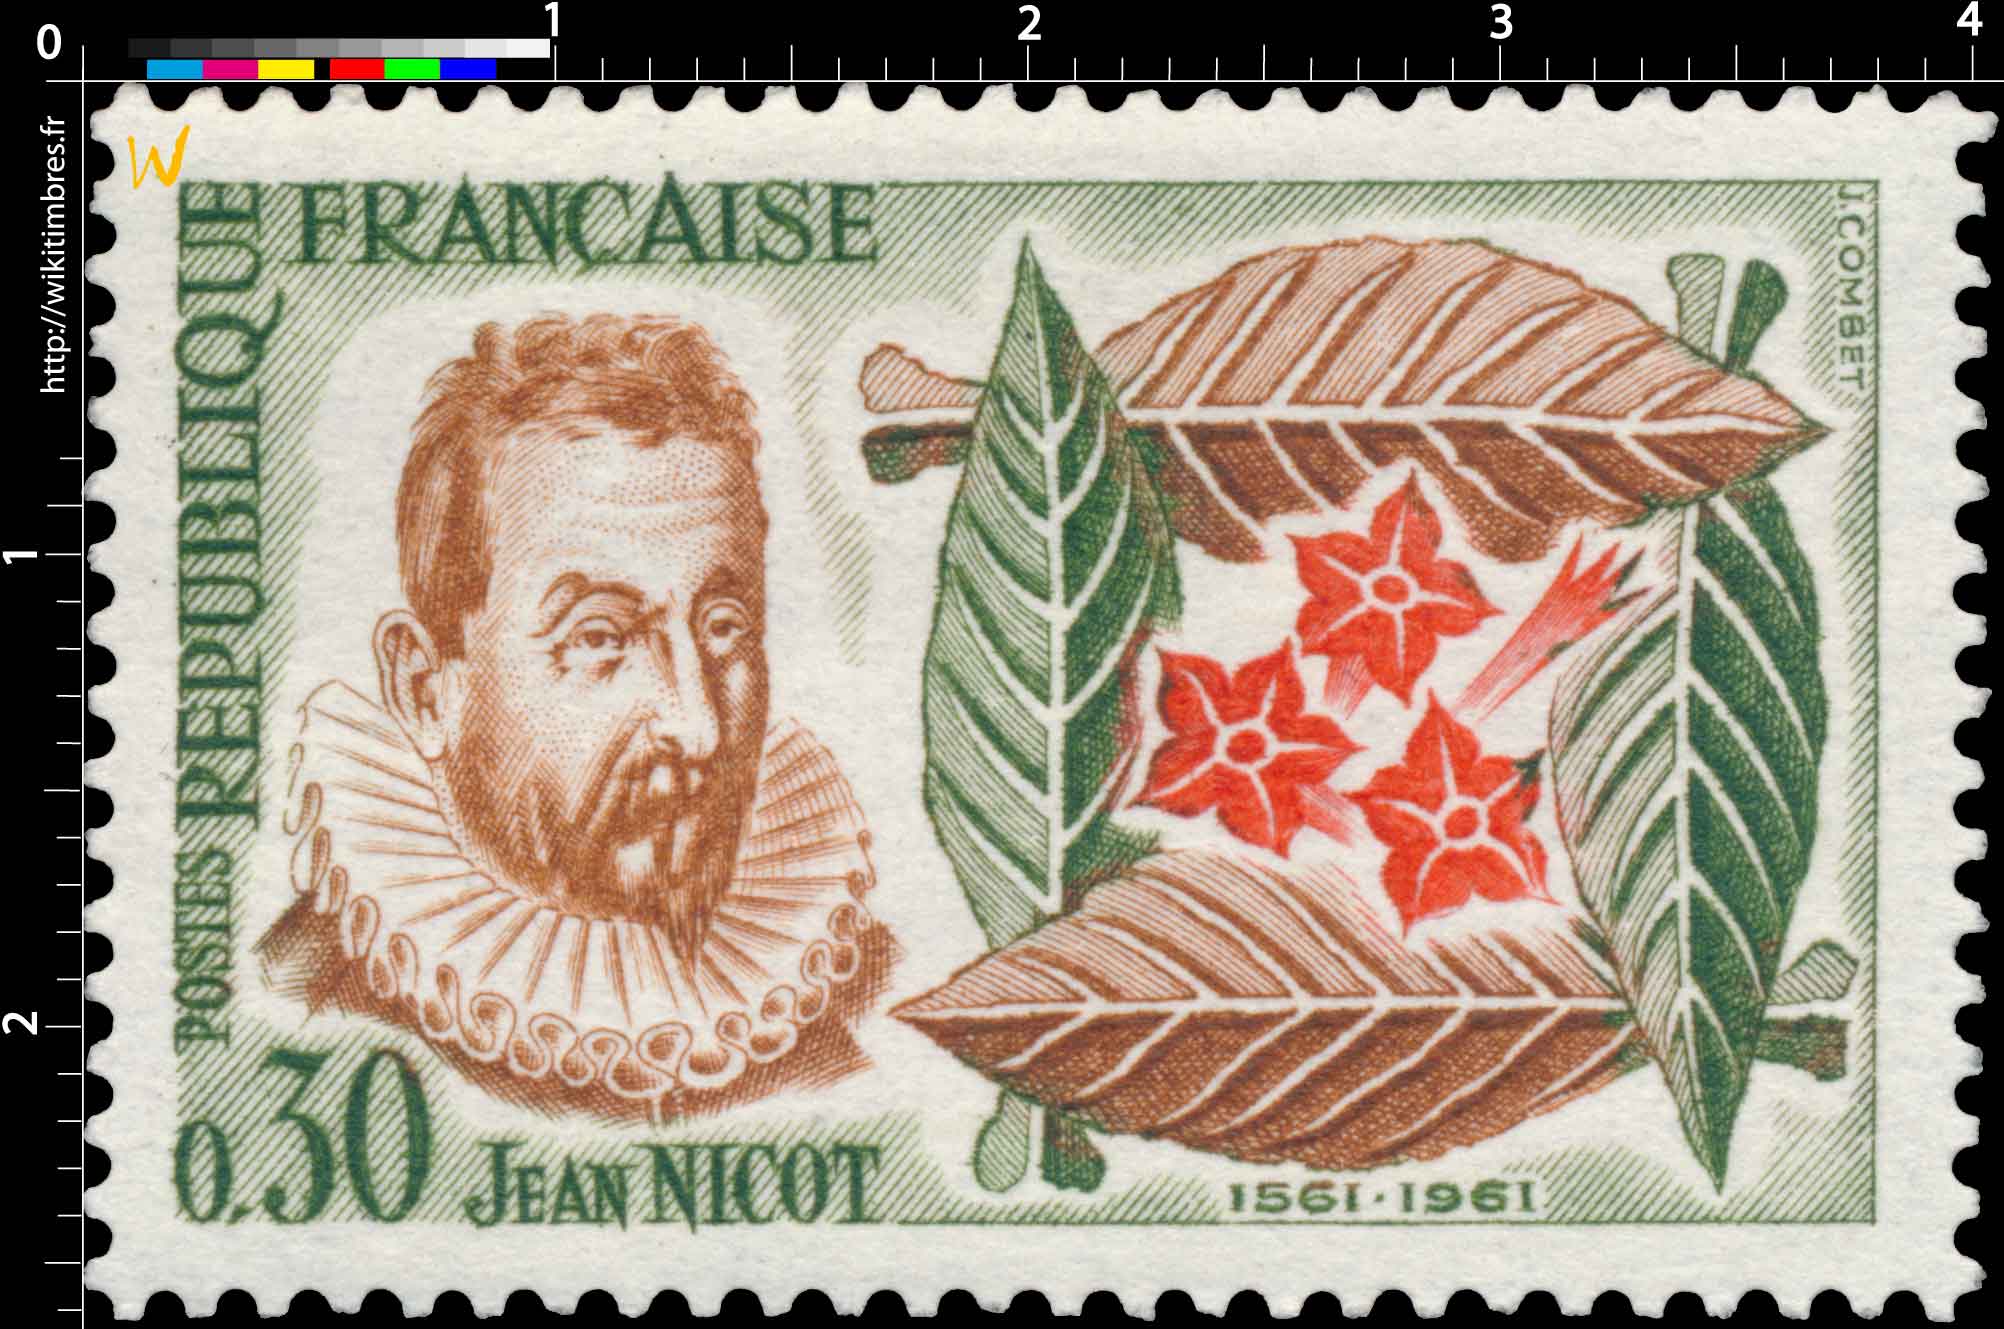 JEAN NICOT 1561-1961